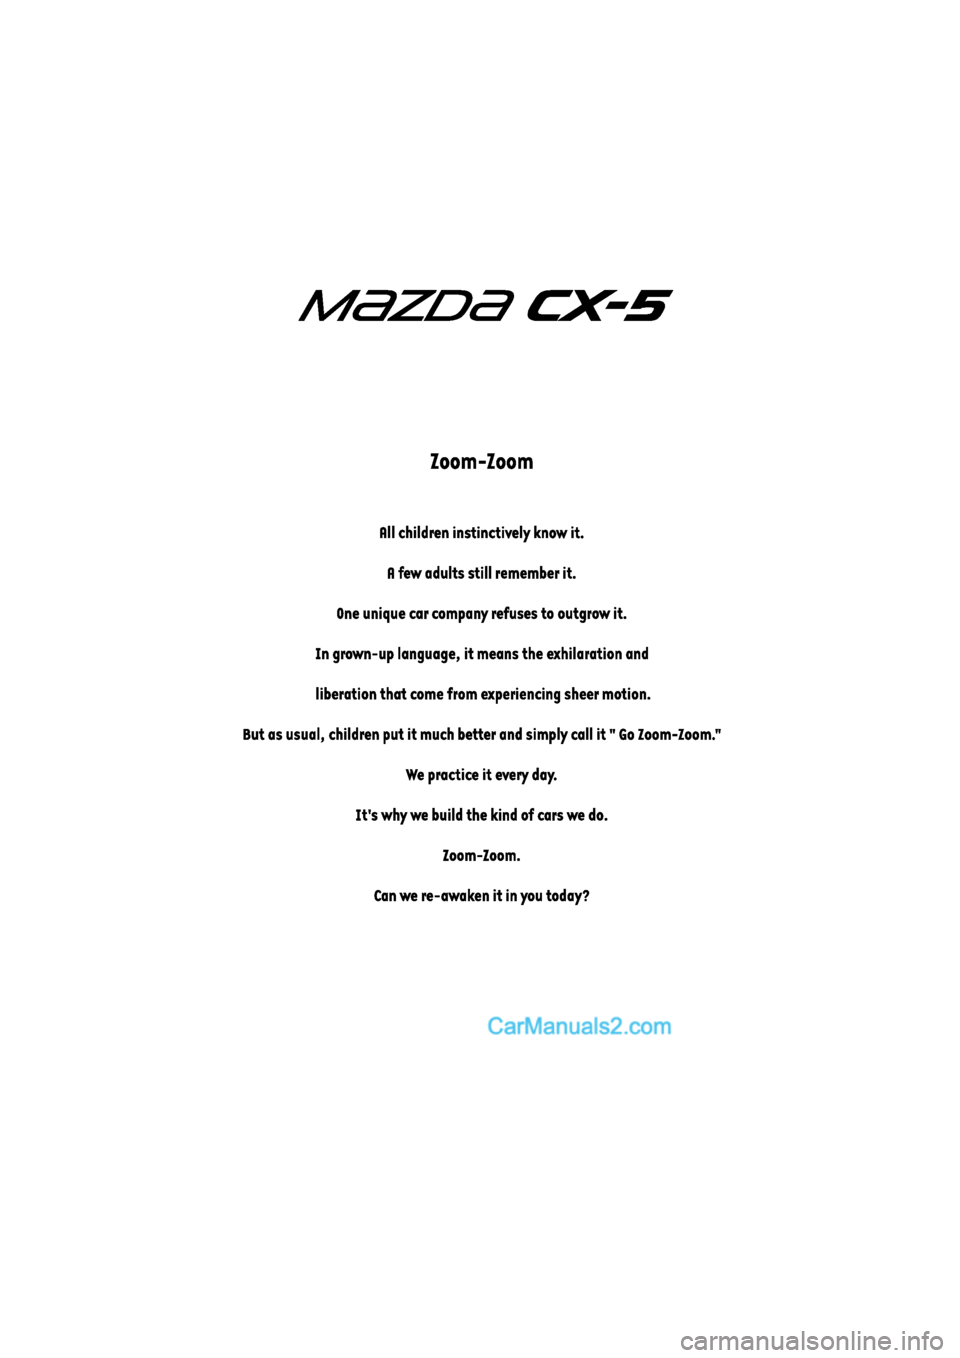 MAZDA MODEL CX-5 2017  Owners Manual - RHD (UK, Australia) (in English) 2017/05/24   12:03:47Form No. CX-5 8FY4-EE-17E+L_Edition2  